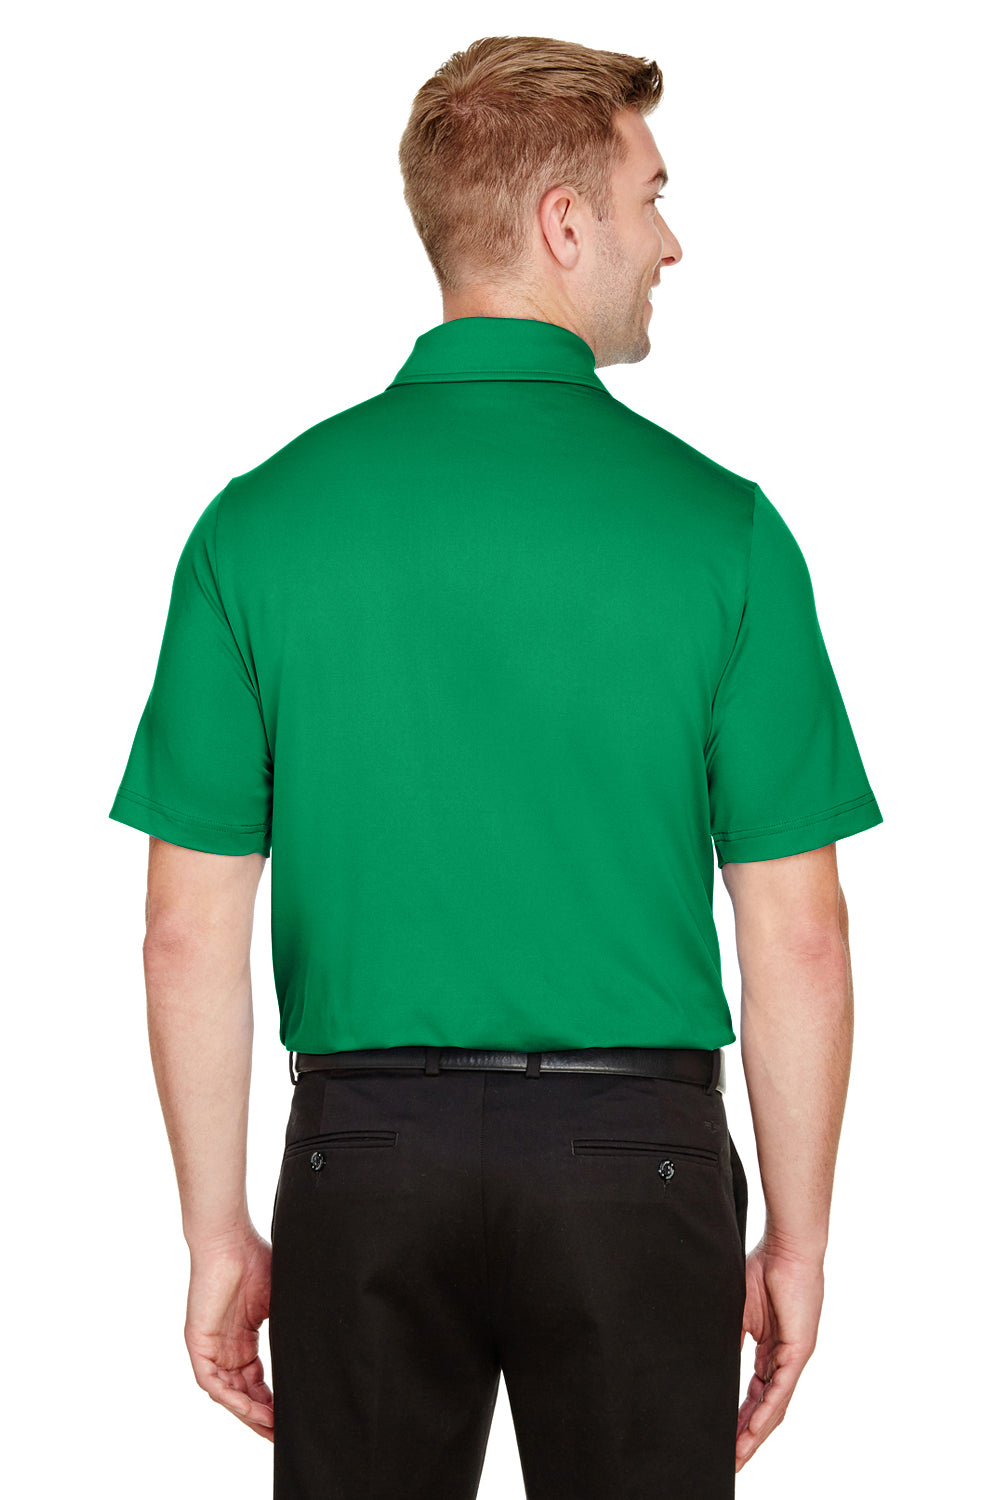 Devon & Jones DG21 Mens CrownLux Range Flex Performance Moisture Wicking Short Sleeve Polo Shirt Kelly Green Back